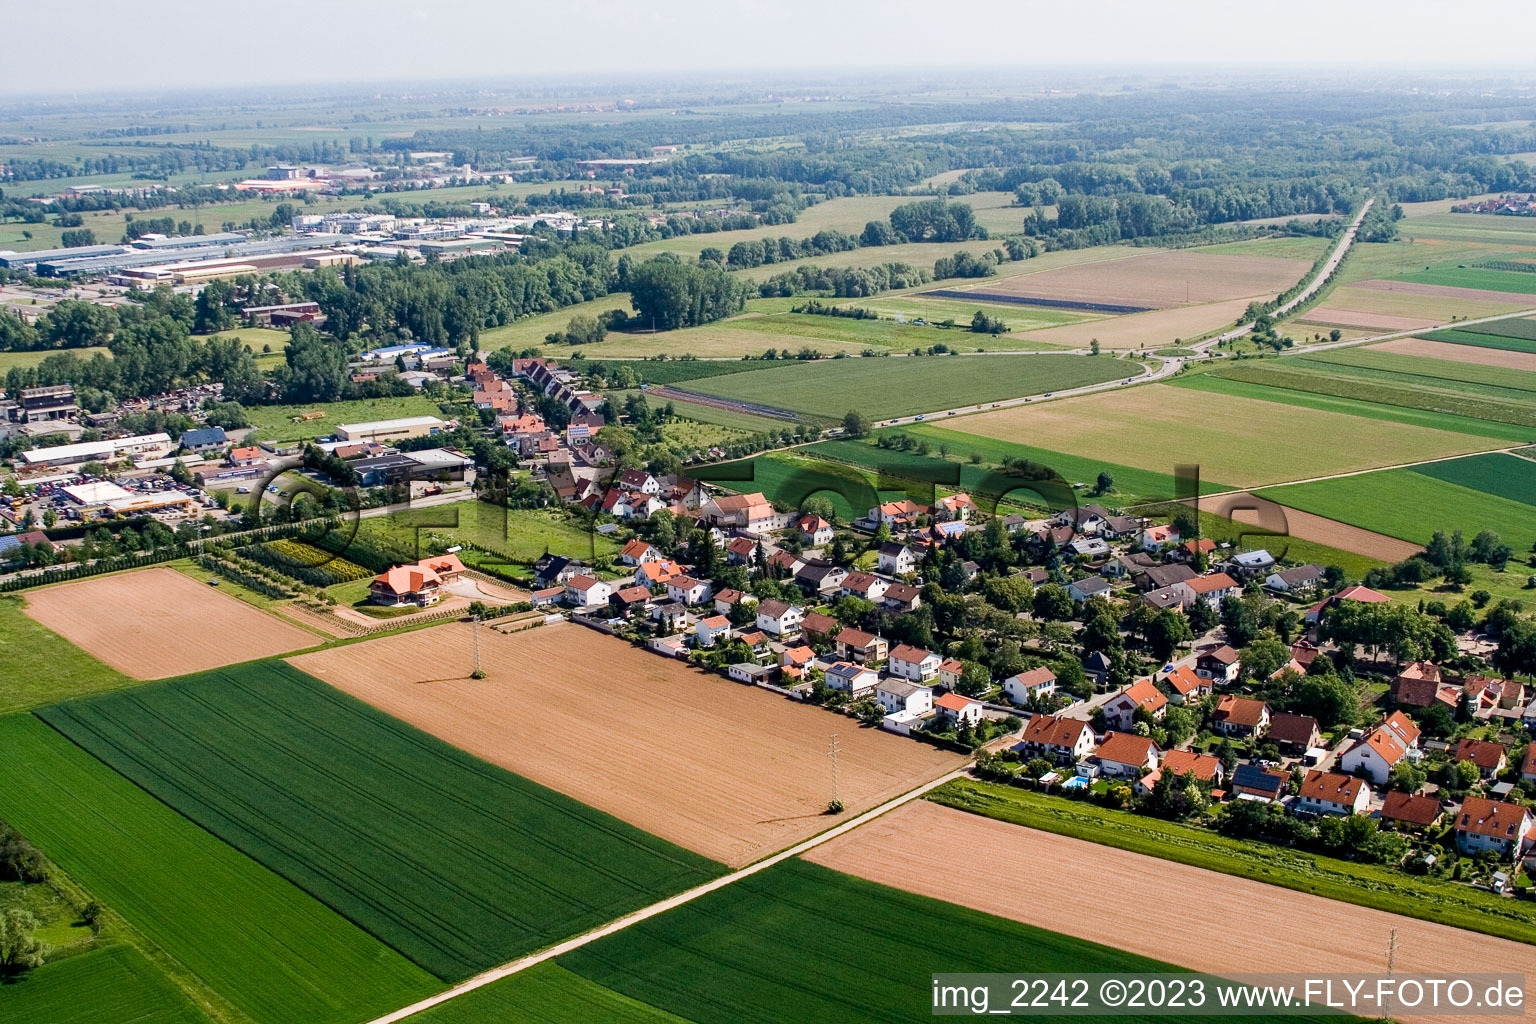 Drone recording of District Mörlheim in Landau in der Pfalz in the state Rhineland-Palatinate, Germany